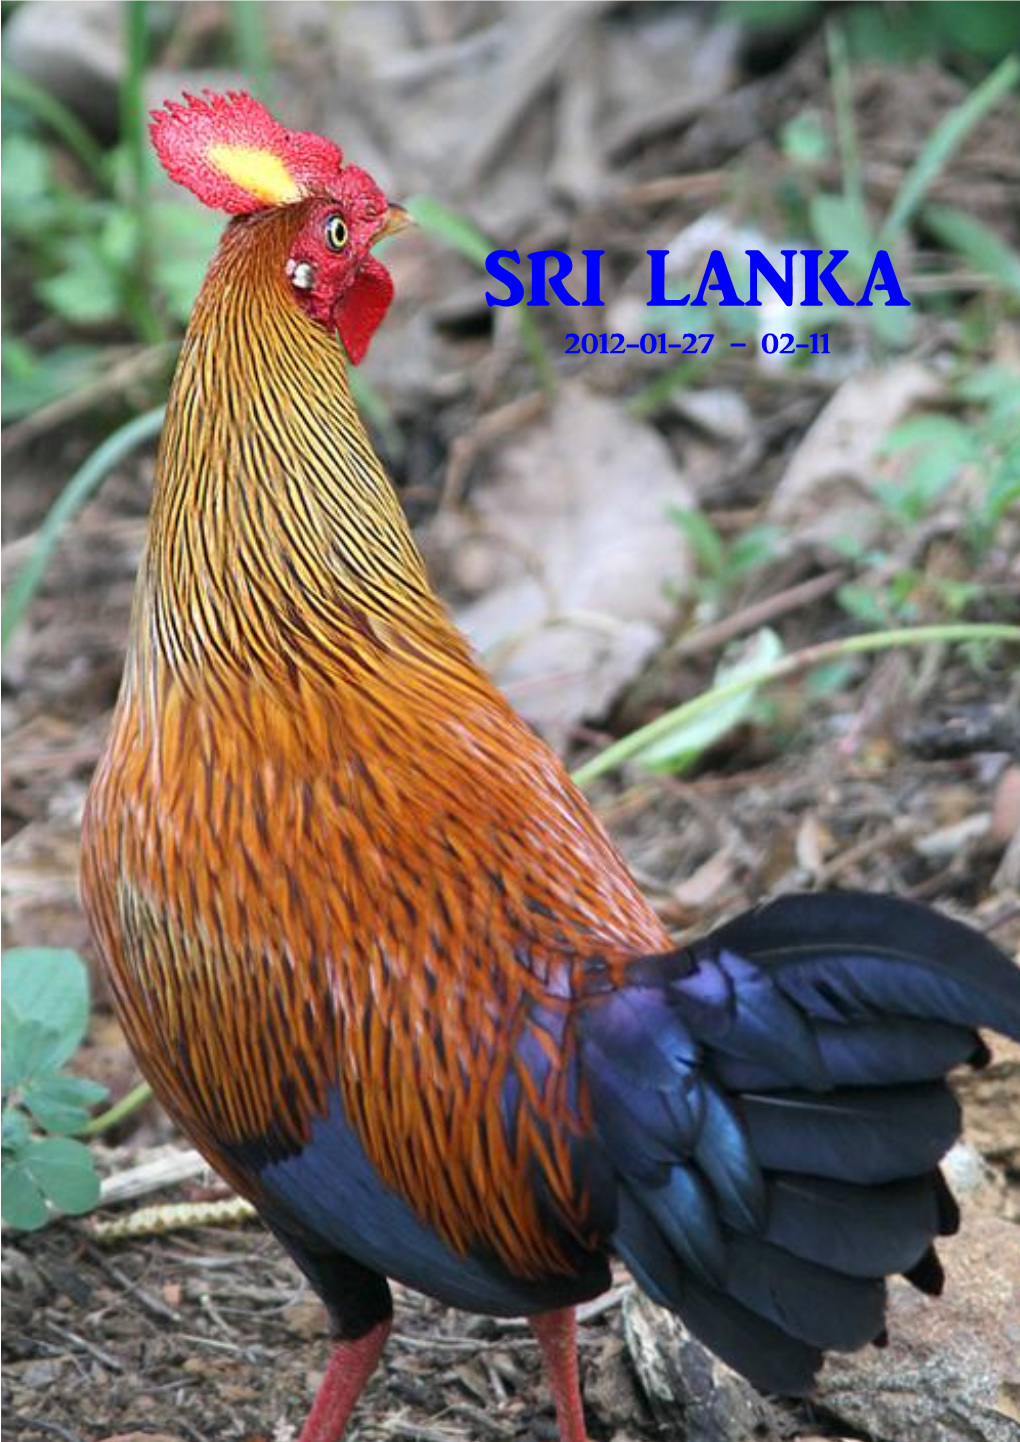 SRI LANKA 2012-01-27 – 02-11 Sri Lanka 2012-01-27 – 02-11 1